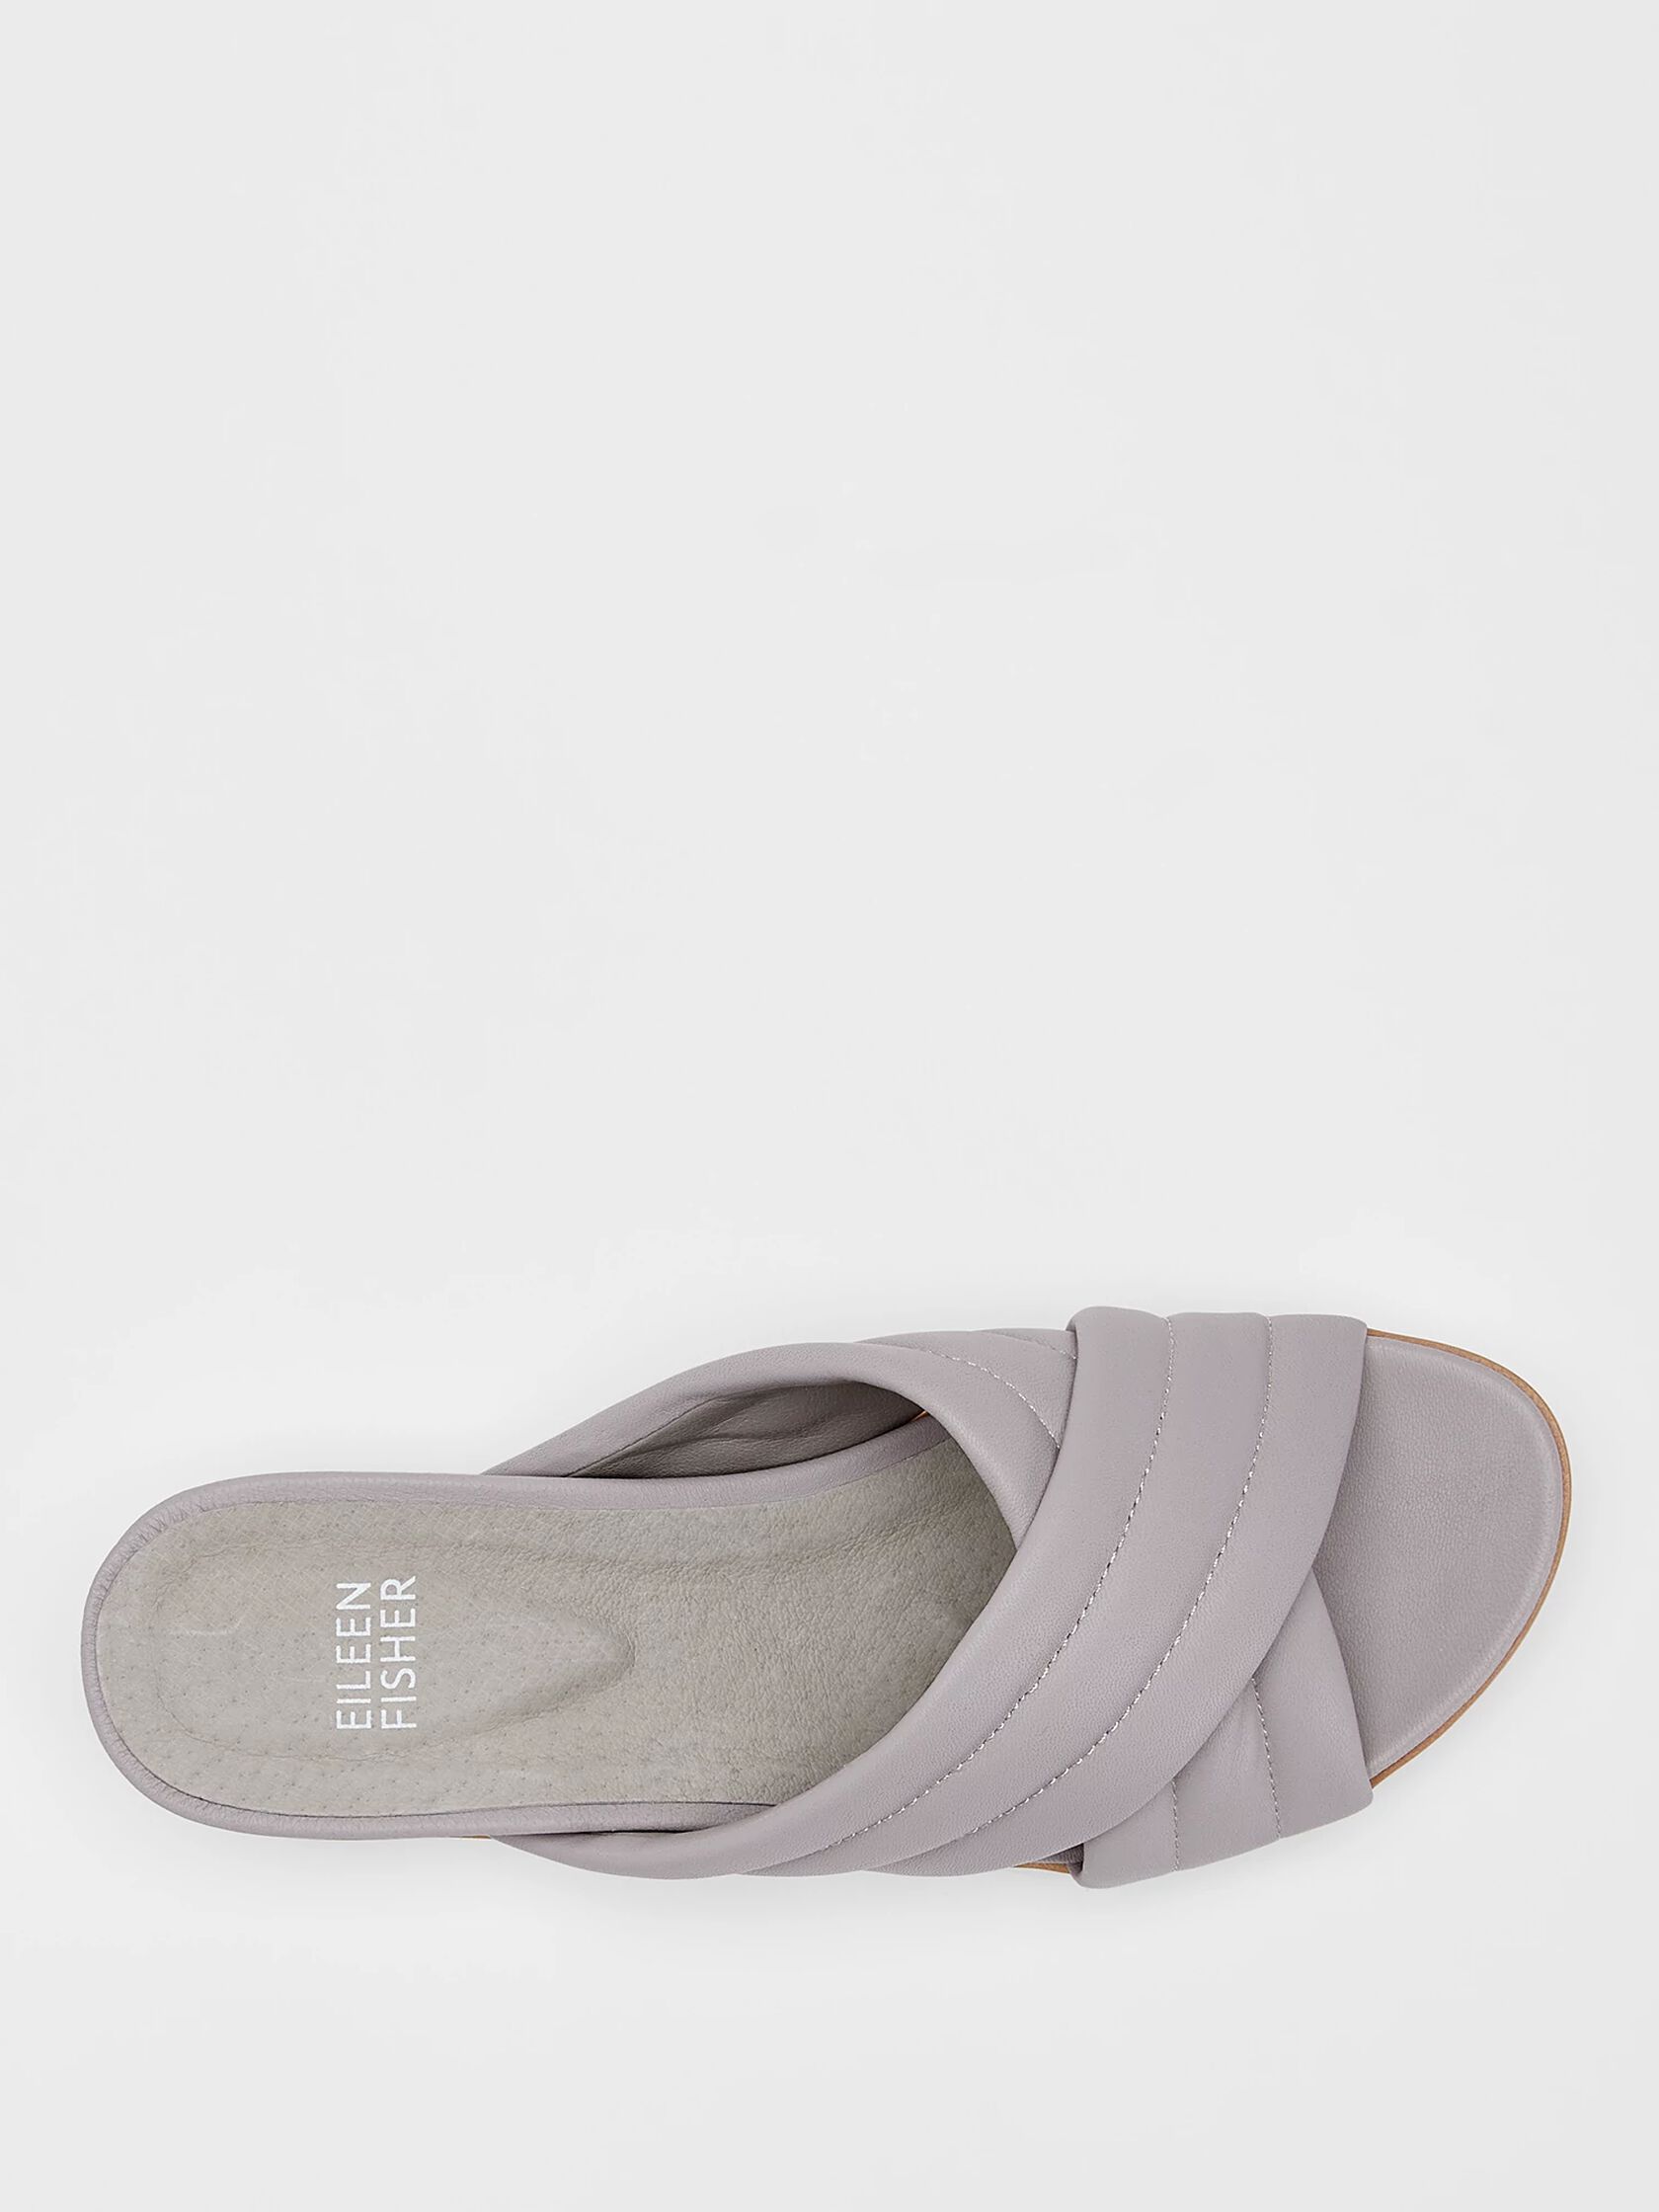 Kye Nappa Leather Slide Sandal